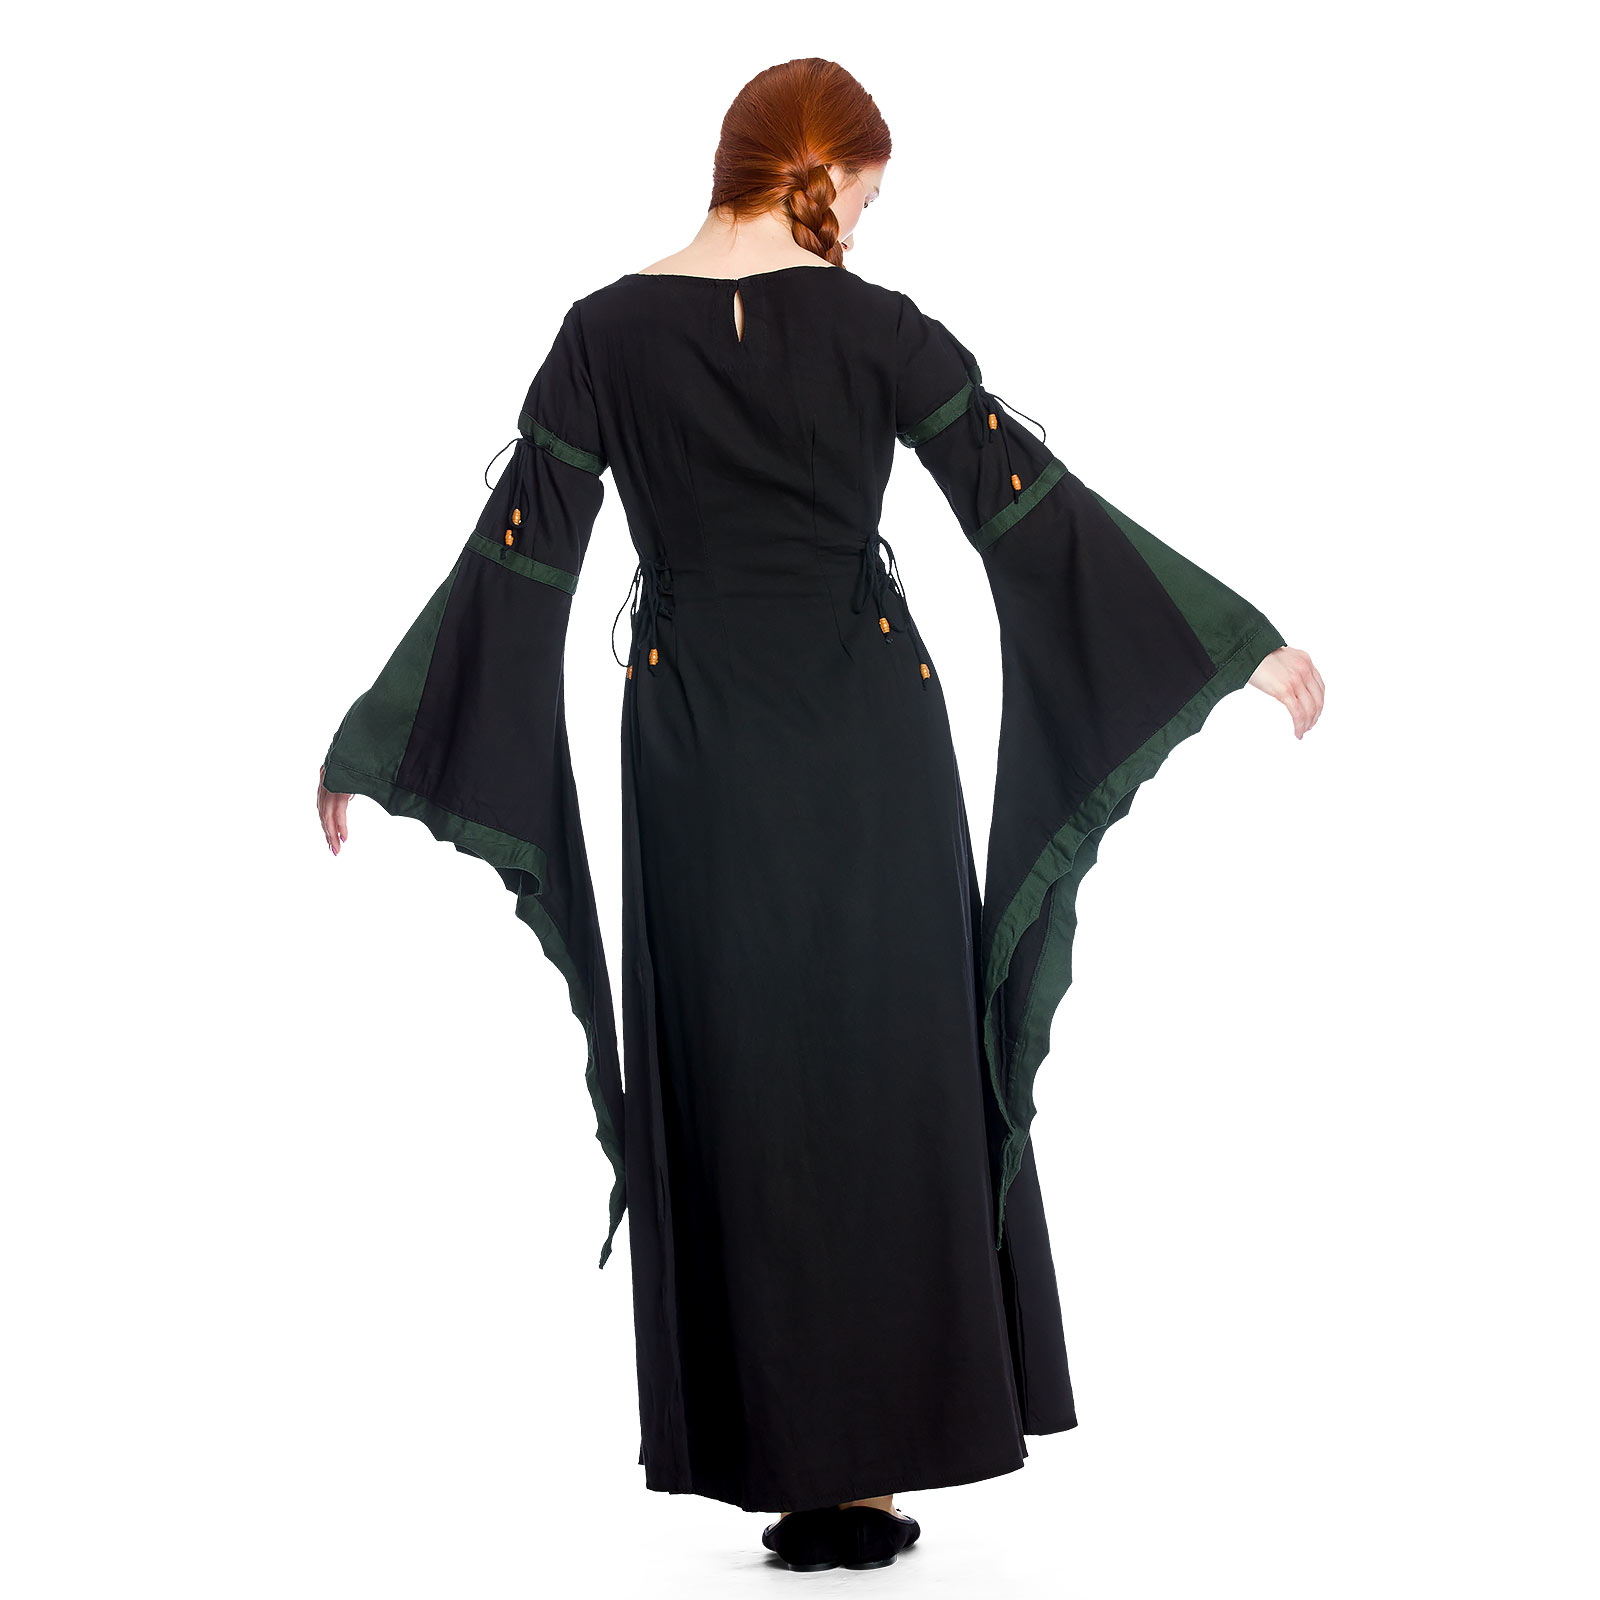 Leona - Robe médiévale noir-vert